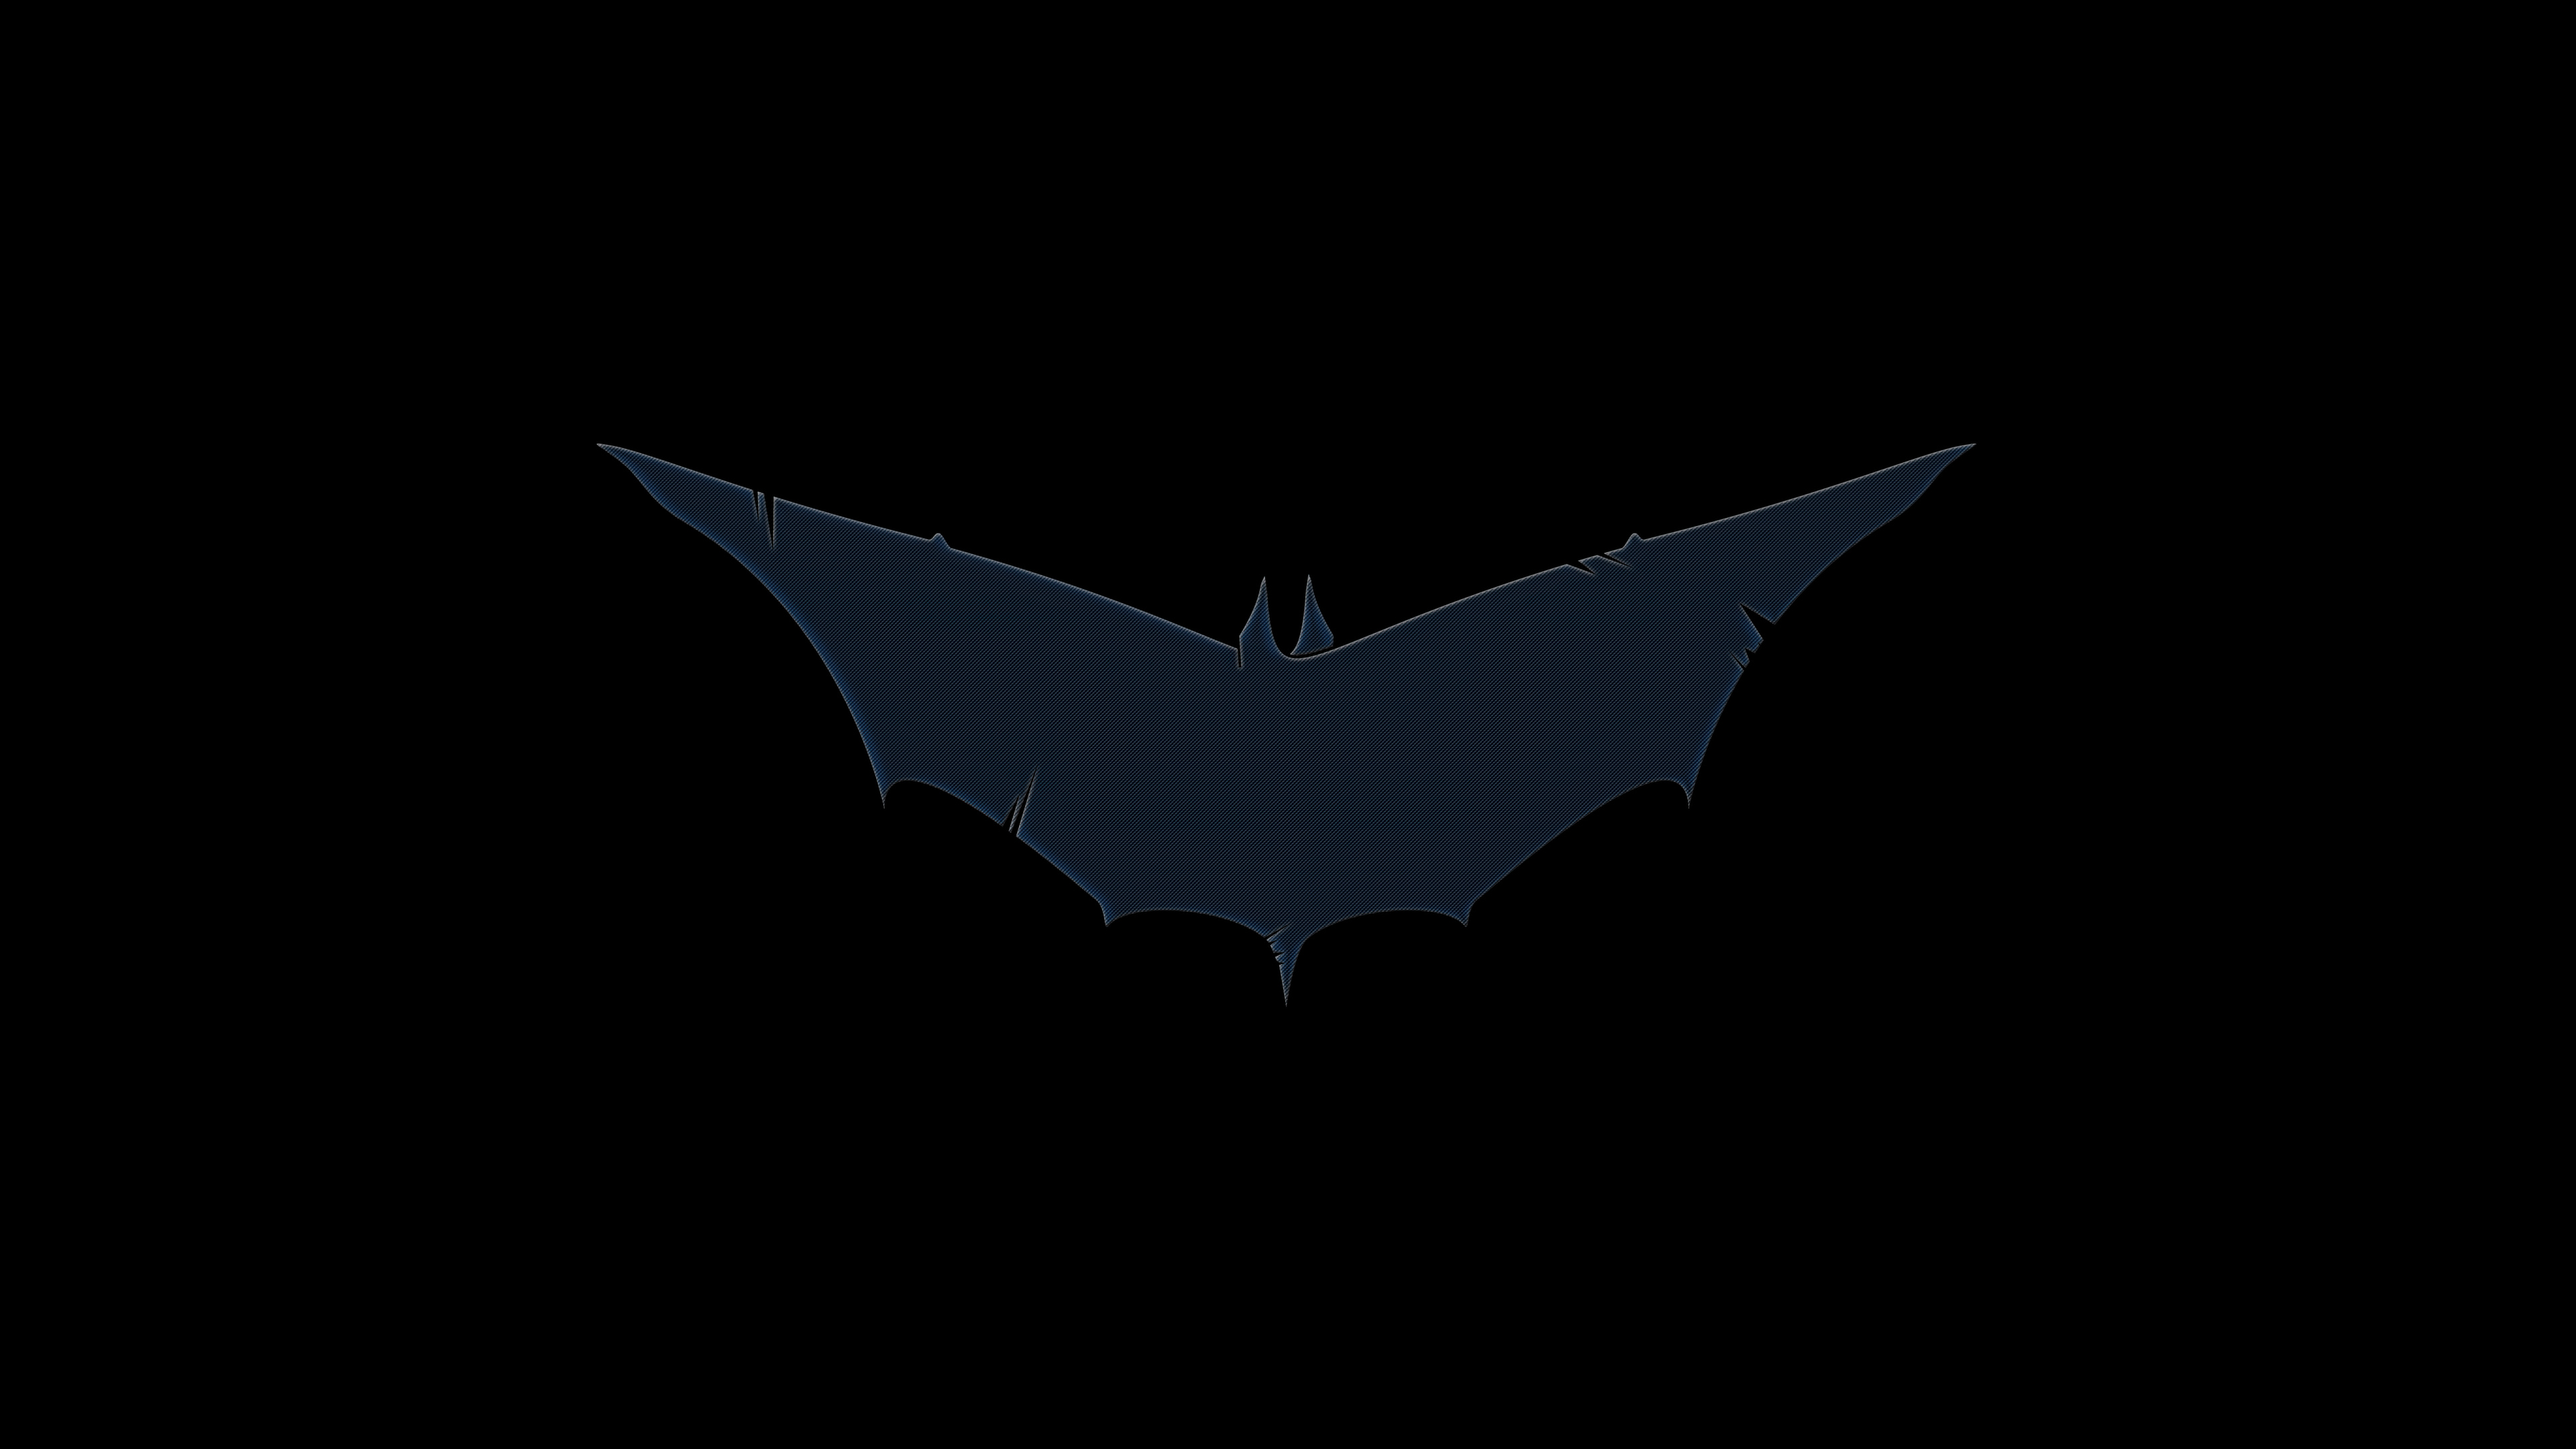 Скачать обои бесплатно Синий, Комиксы, Бэтмен, Логотип Бэтмена, Супергерой, Комиксы Dc картинка на рабочий стол ПК